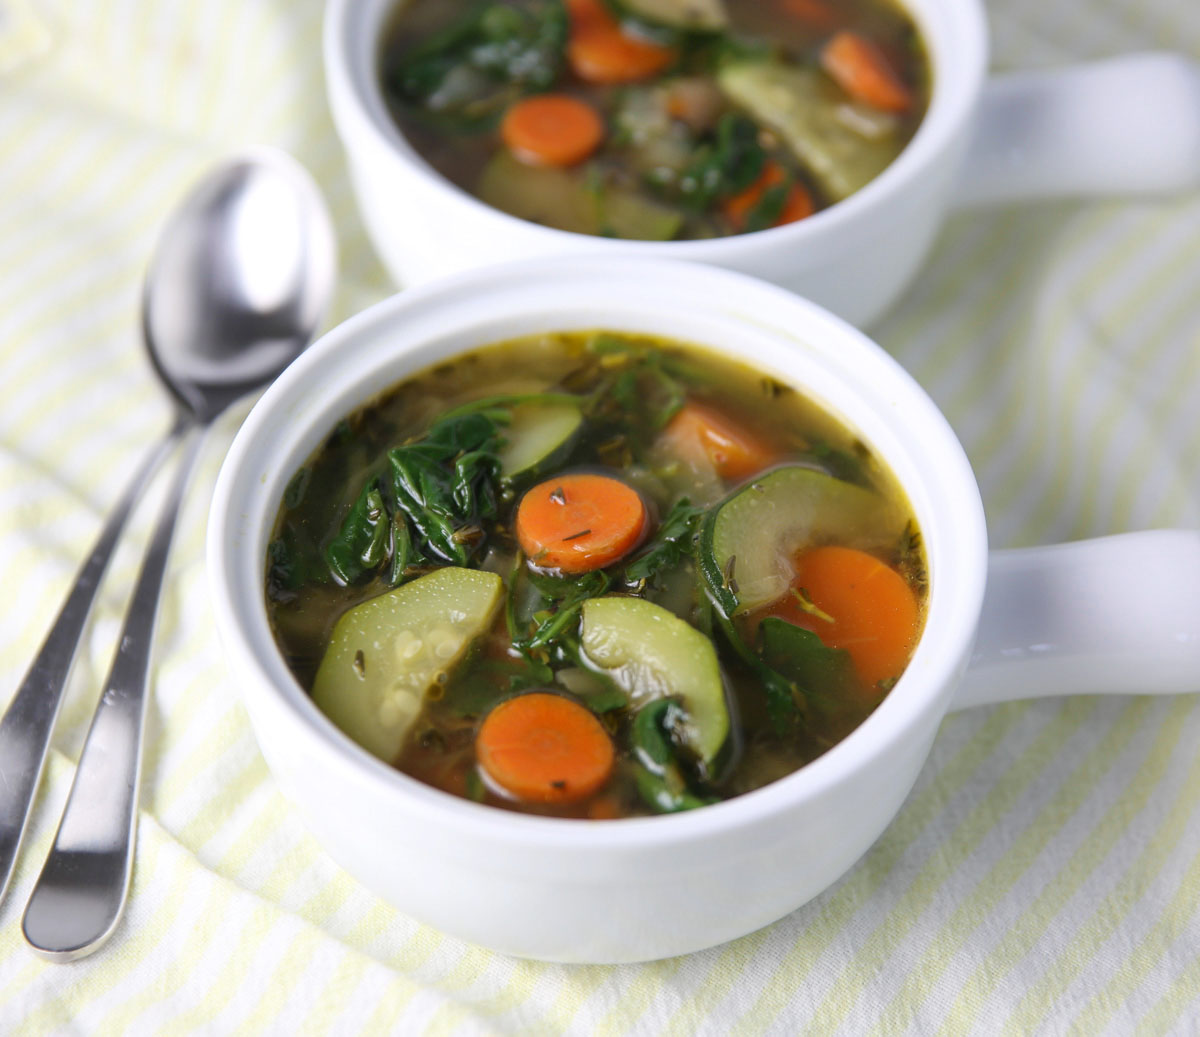 vegetable detox soup